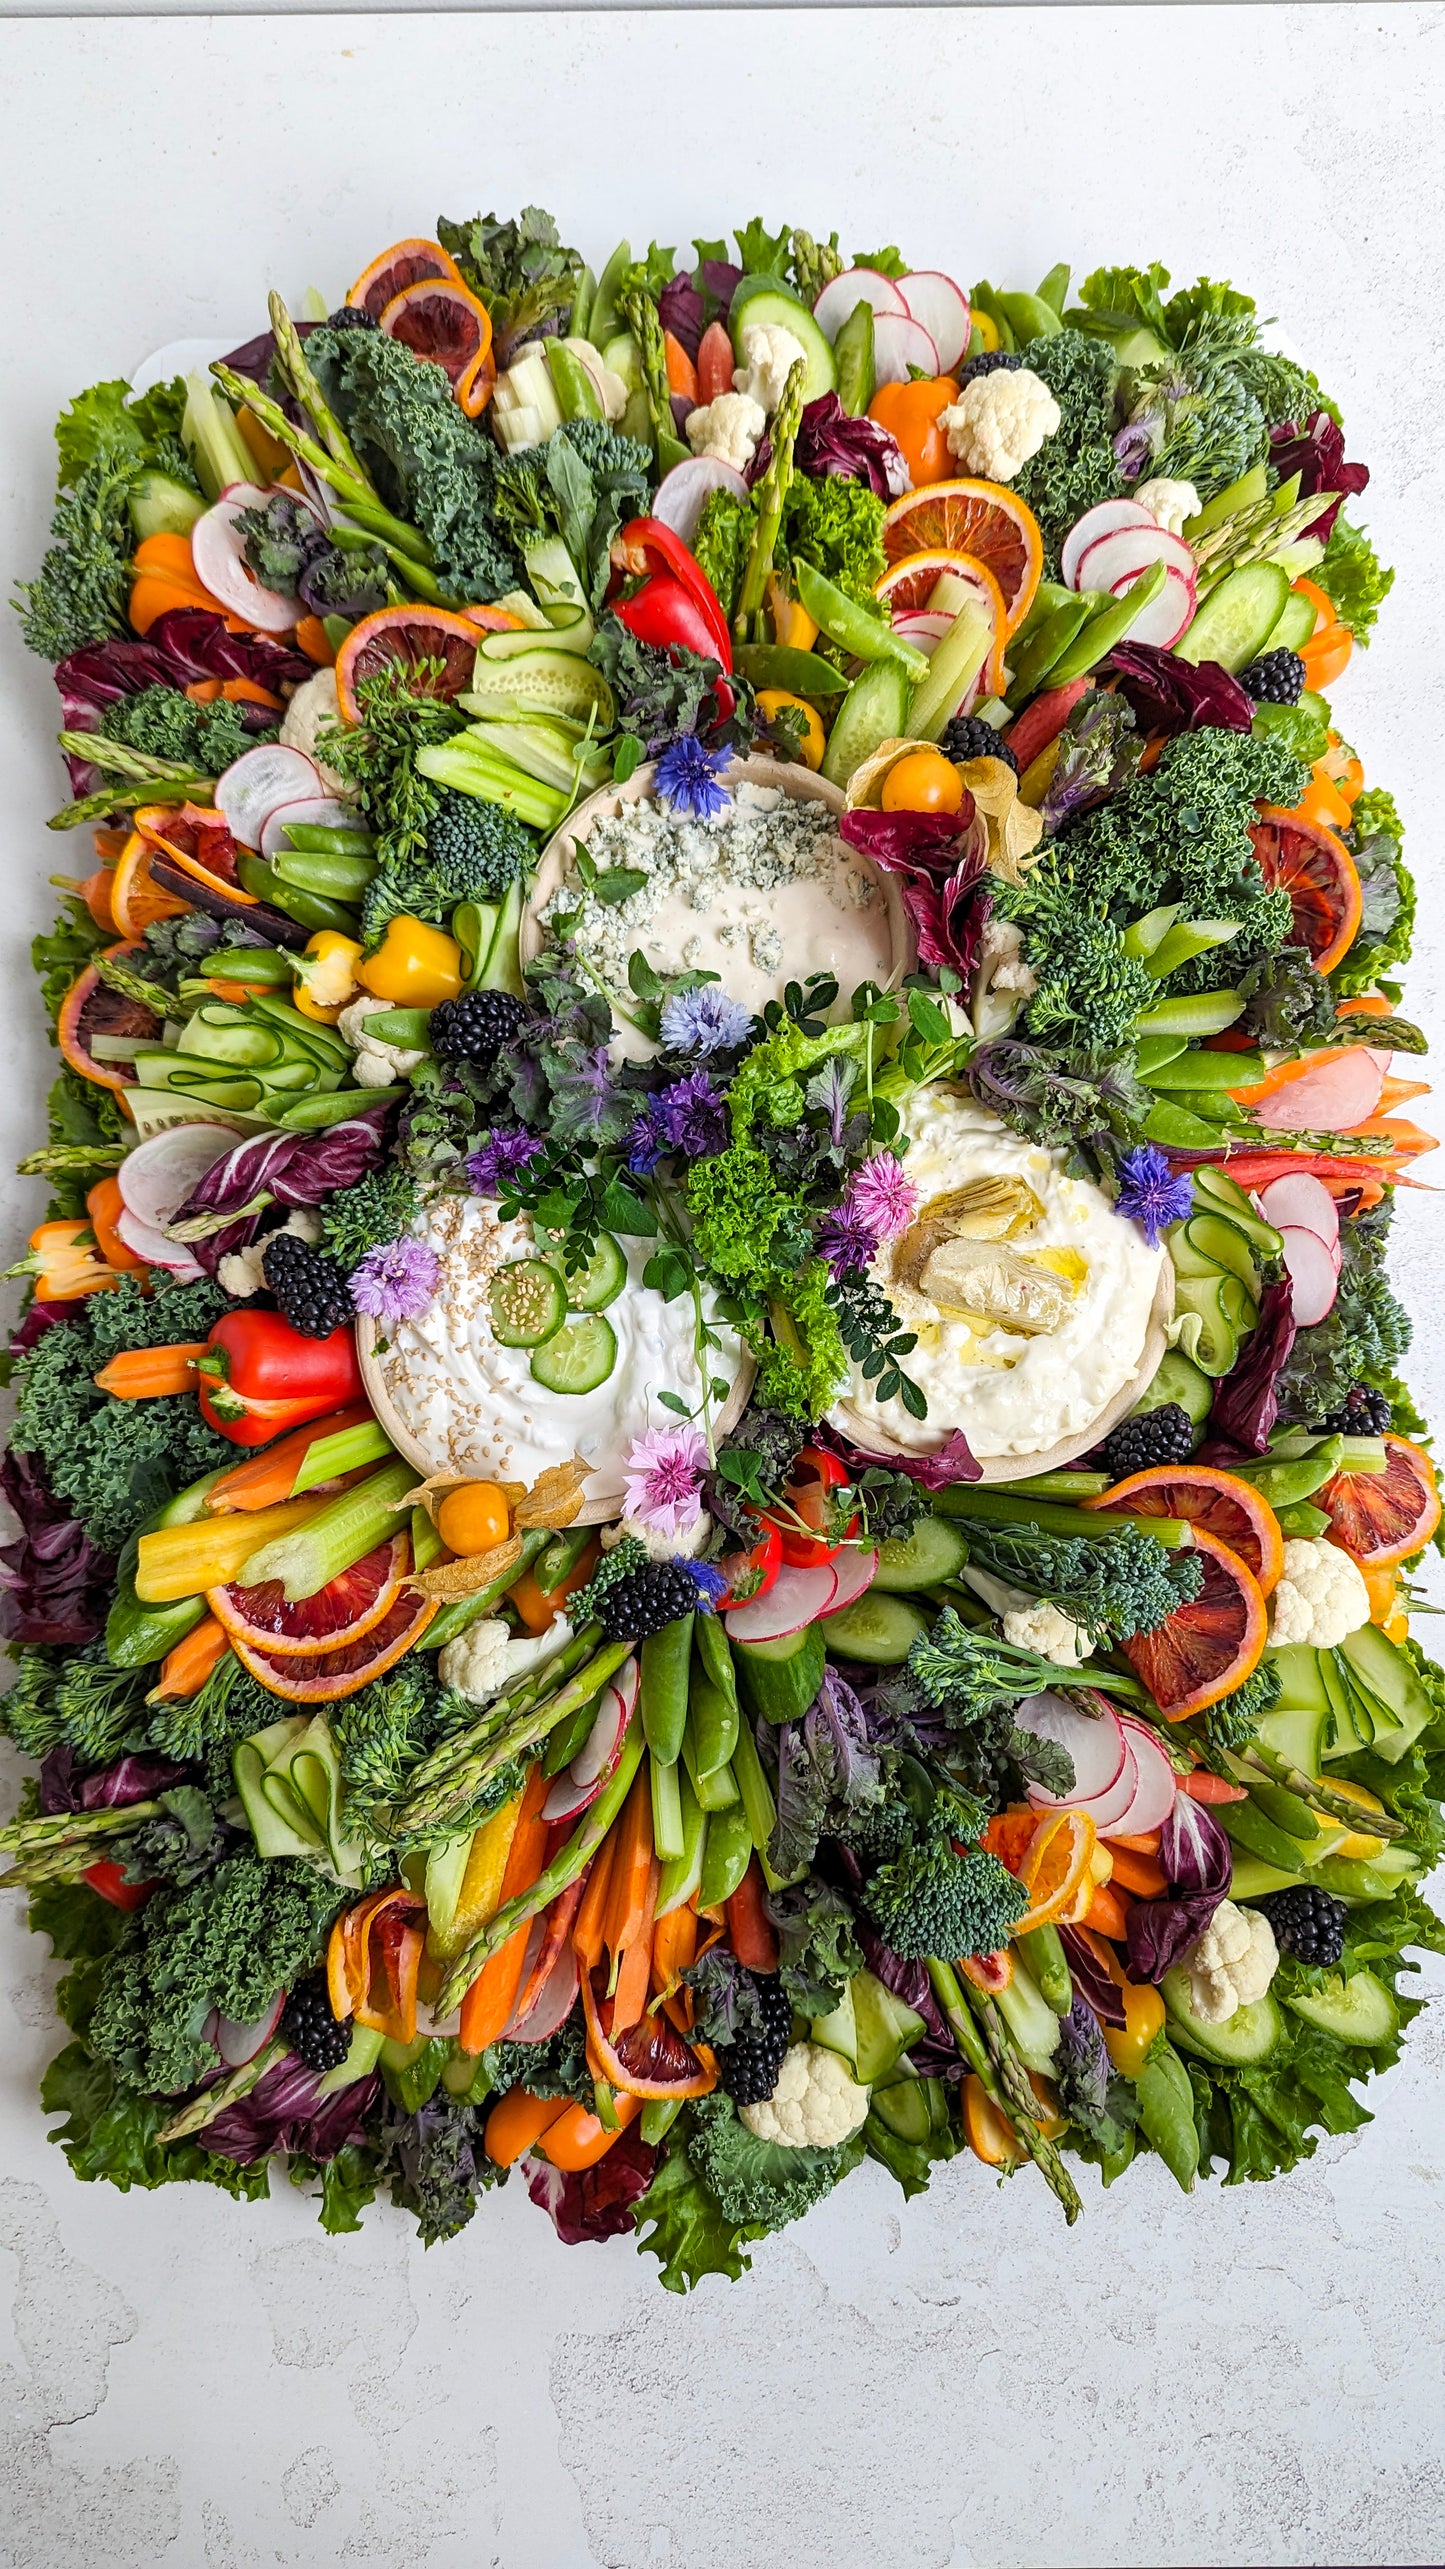 Vegetables & Dip Platter